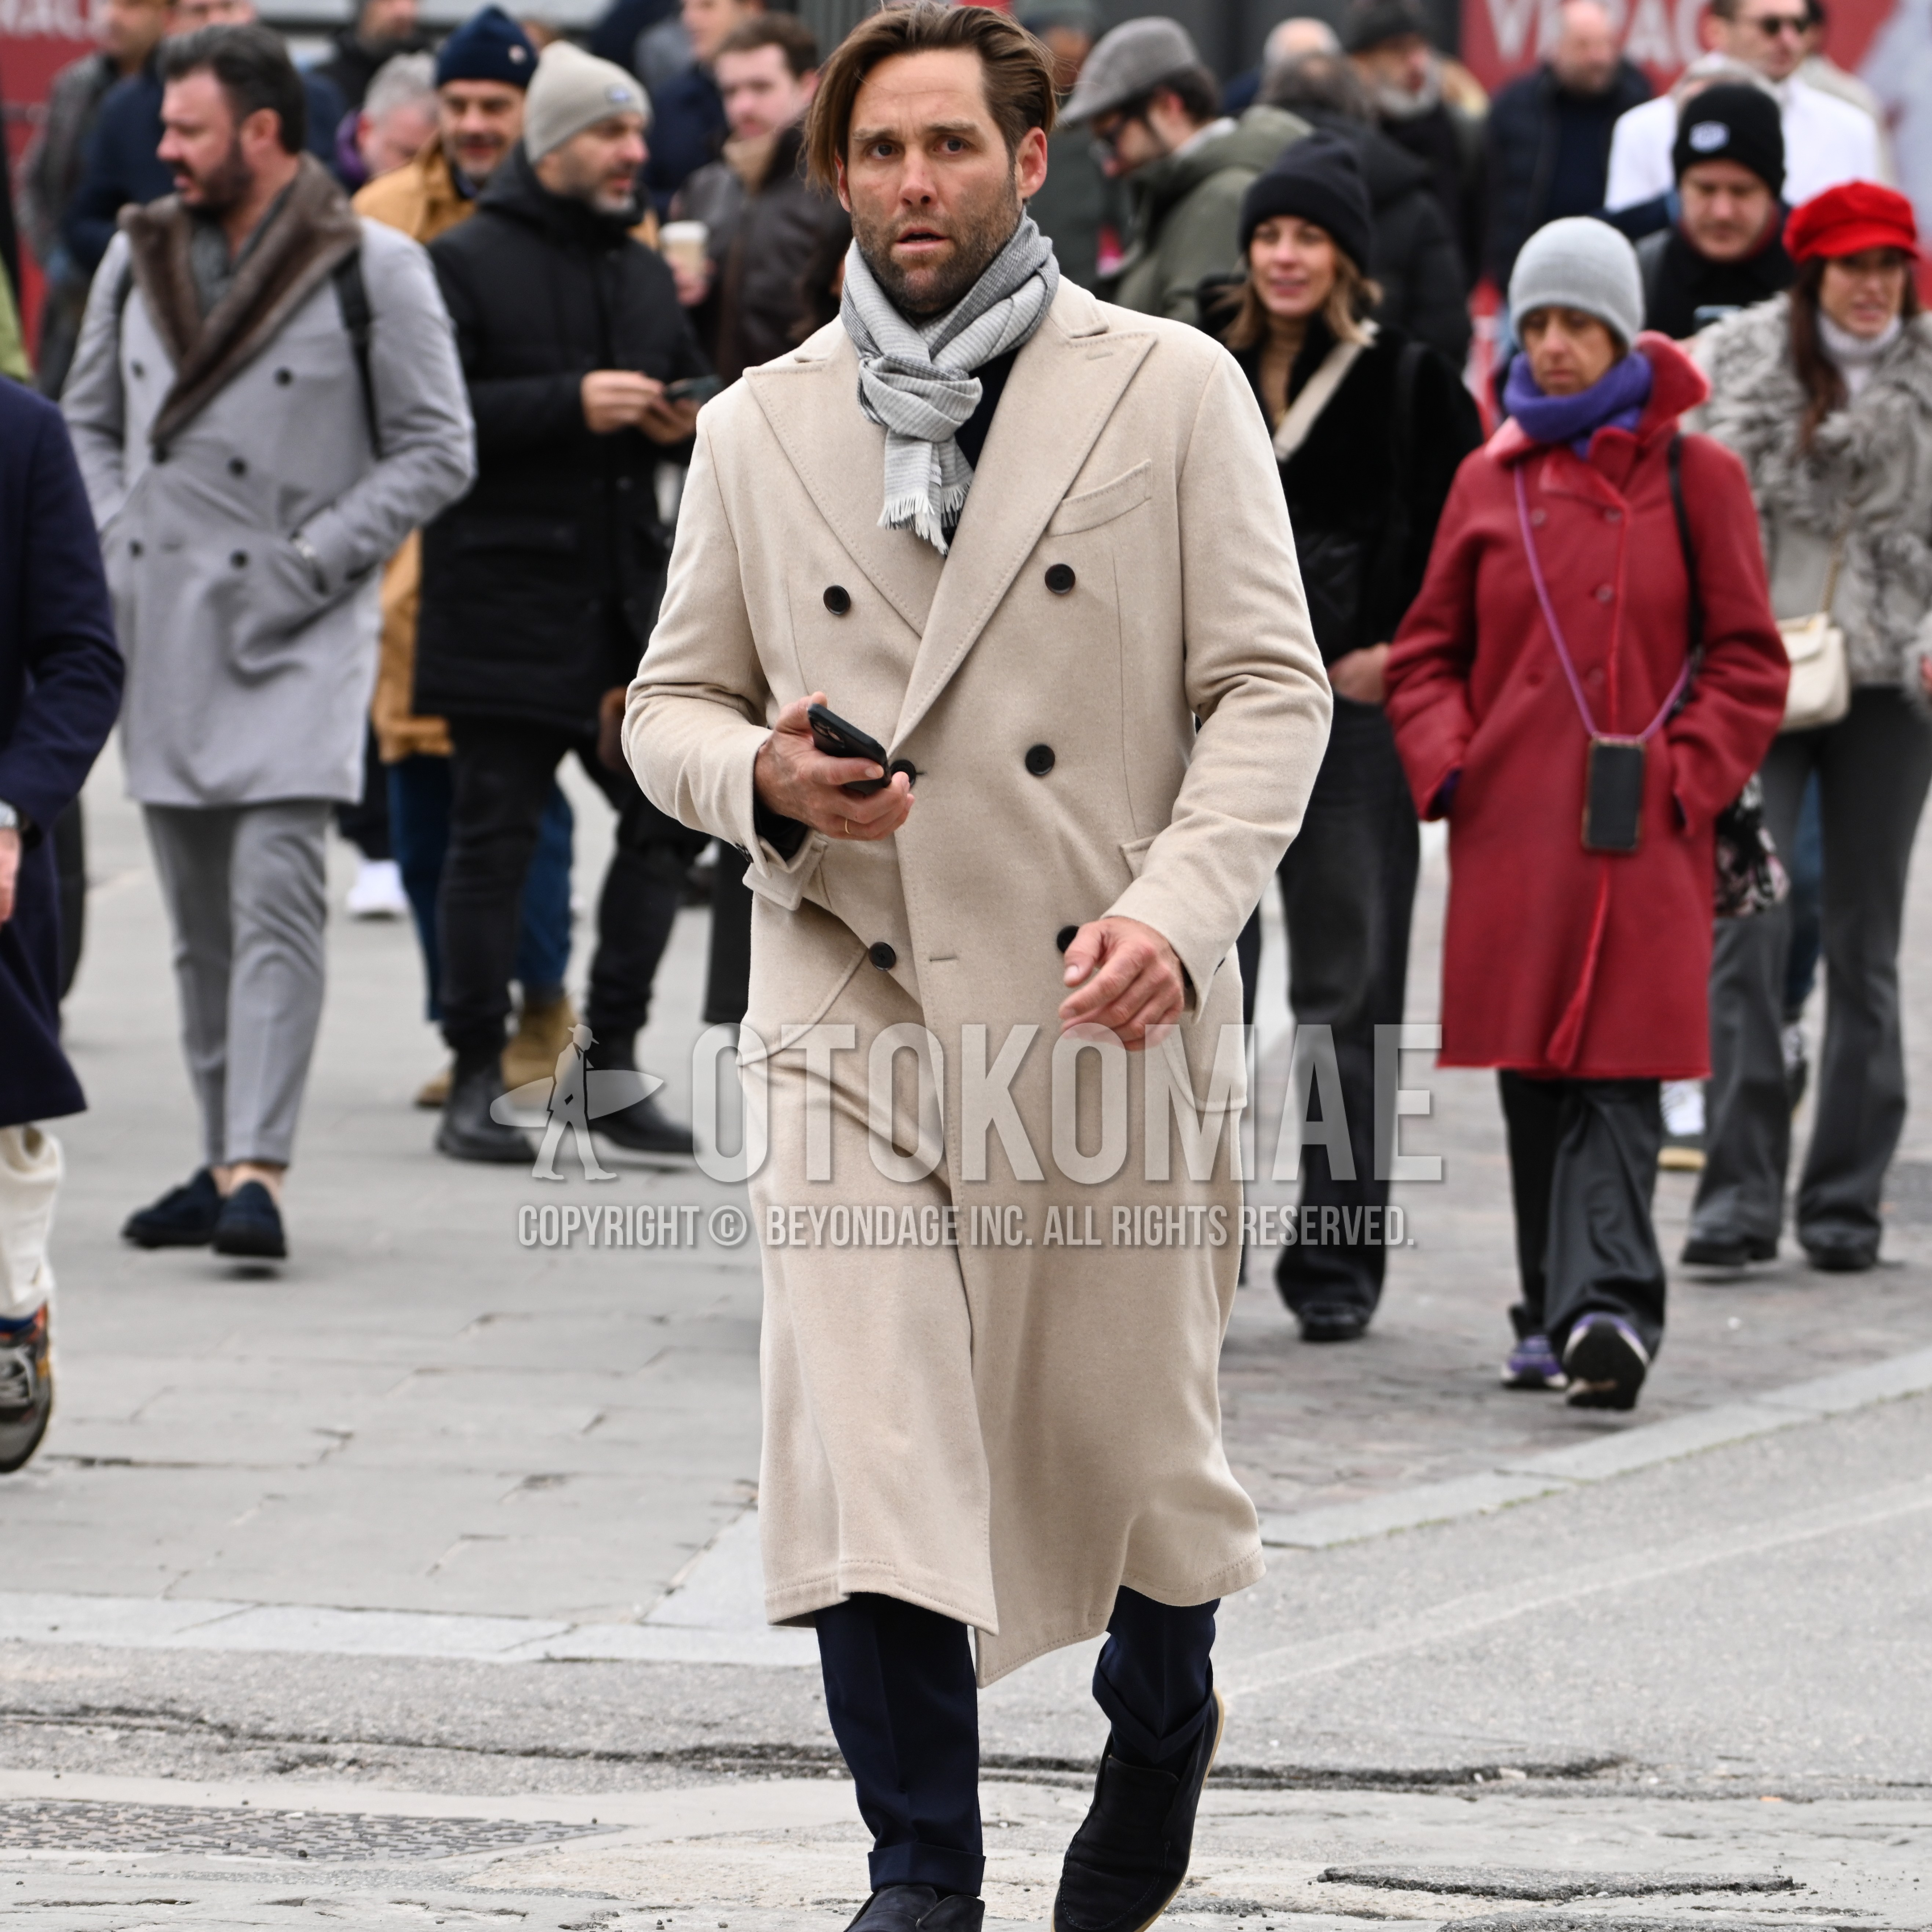 Men's autumn winter outfit with gray horizontal stripes scarf, beige plain ulster coat, navy plain slacks, black suede shoes leather shoes.